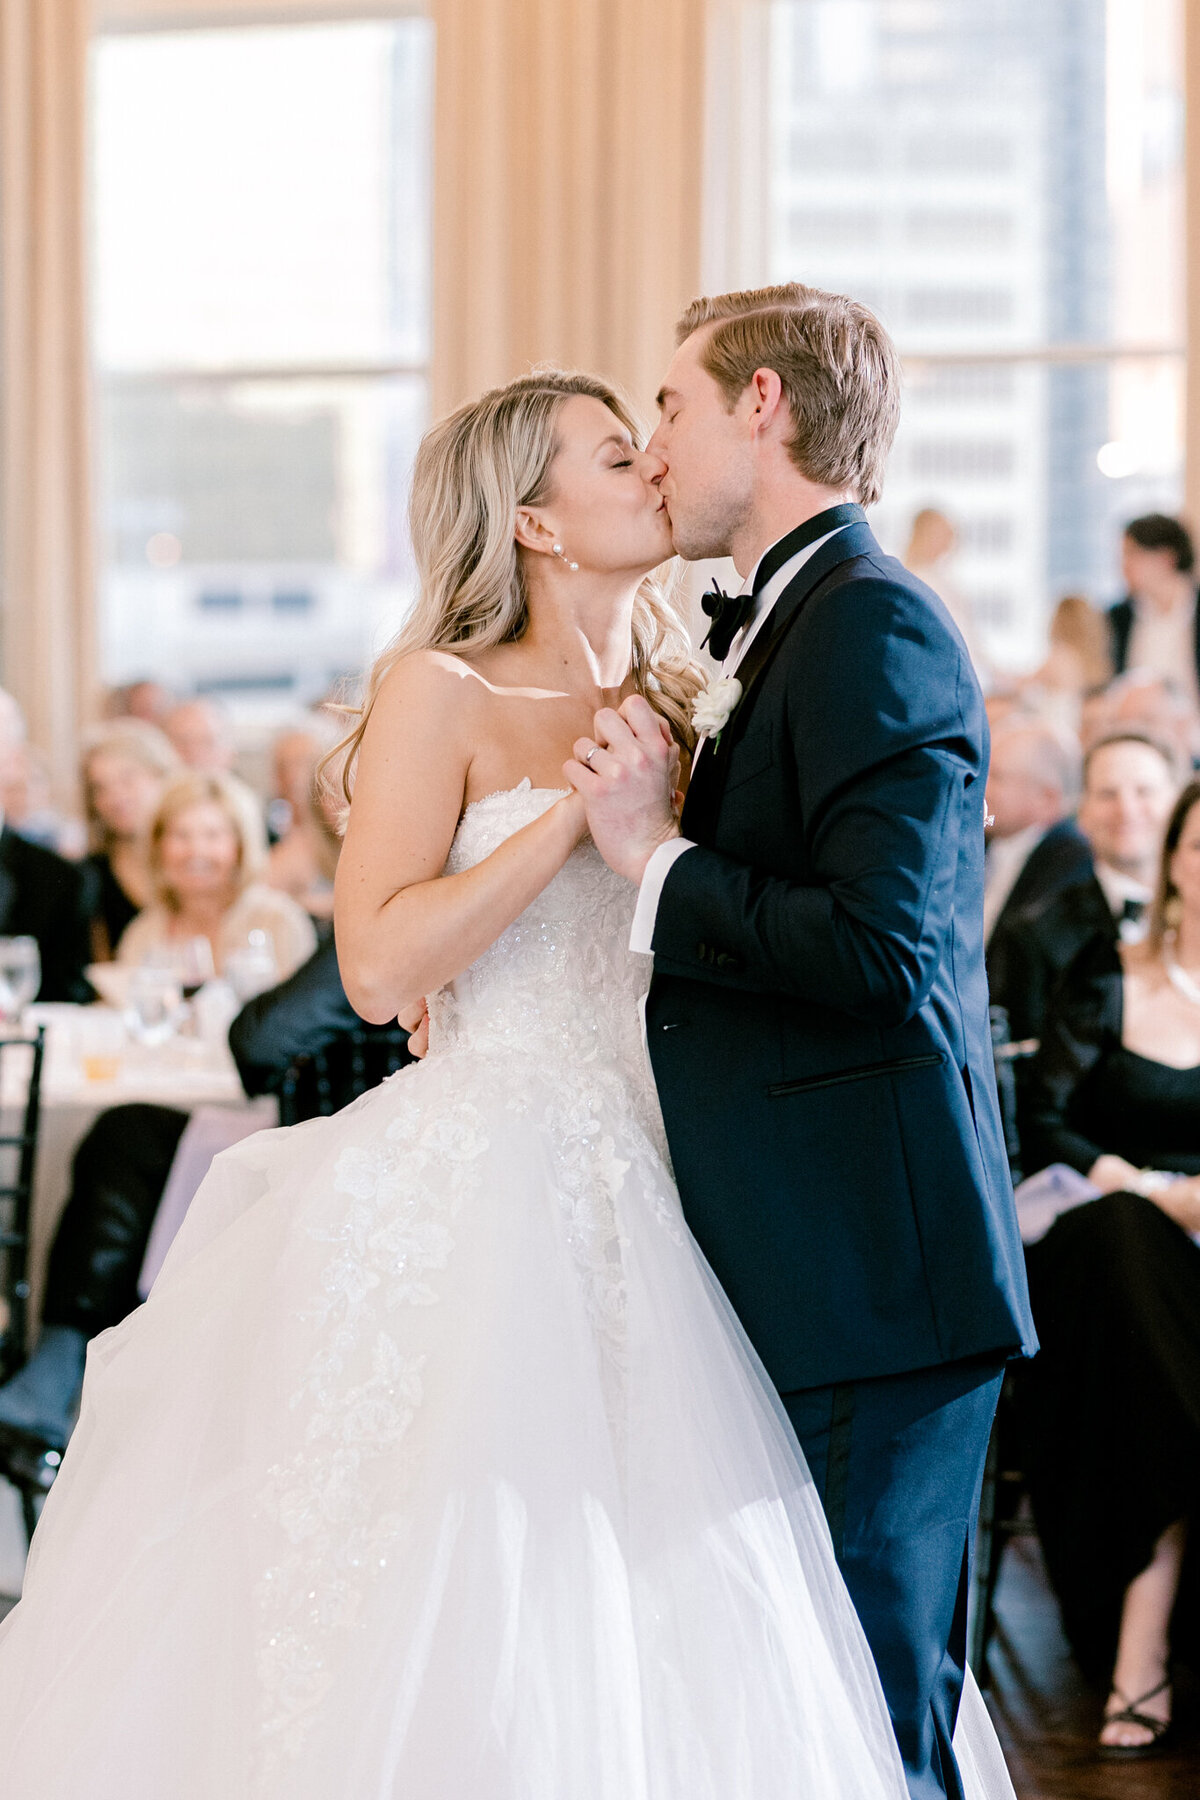 Shelby & Thomas's Wedding at HPUMC The Room on Main | Dallas Wedding Photographer | Sami Kathryn Photography-193